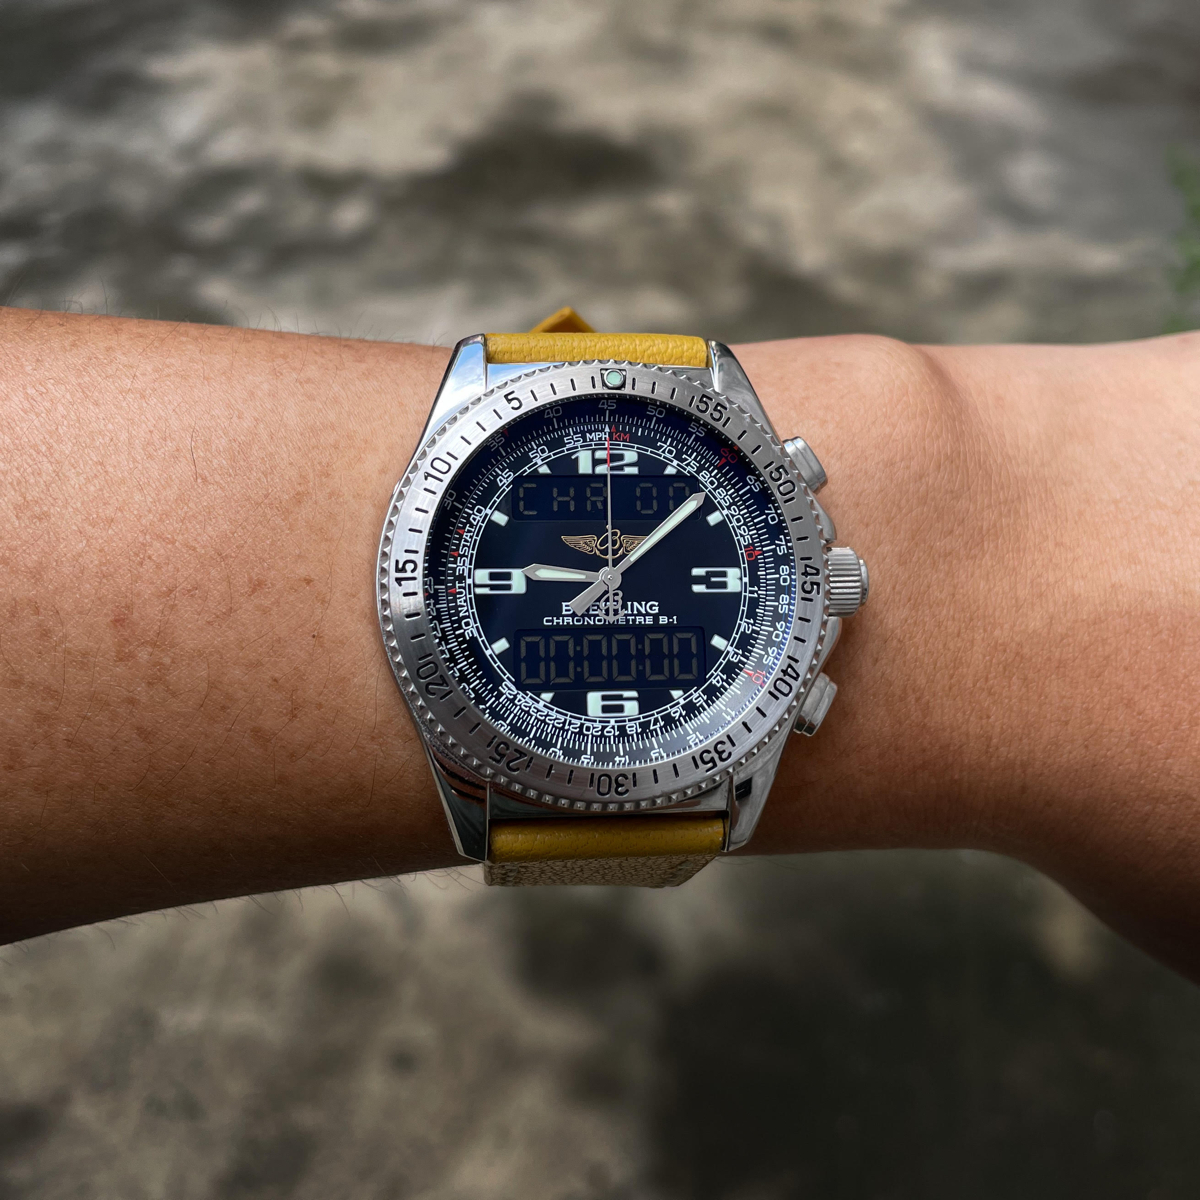 Owner review: Breitling Chronometre B-1